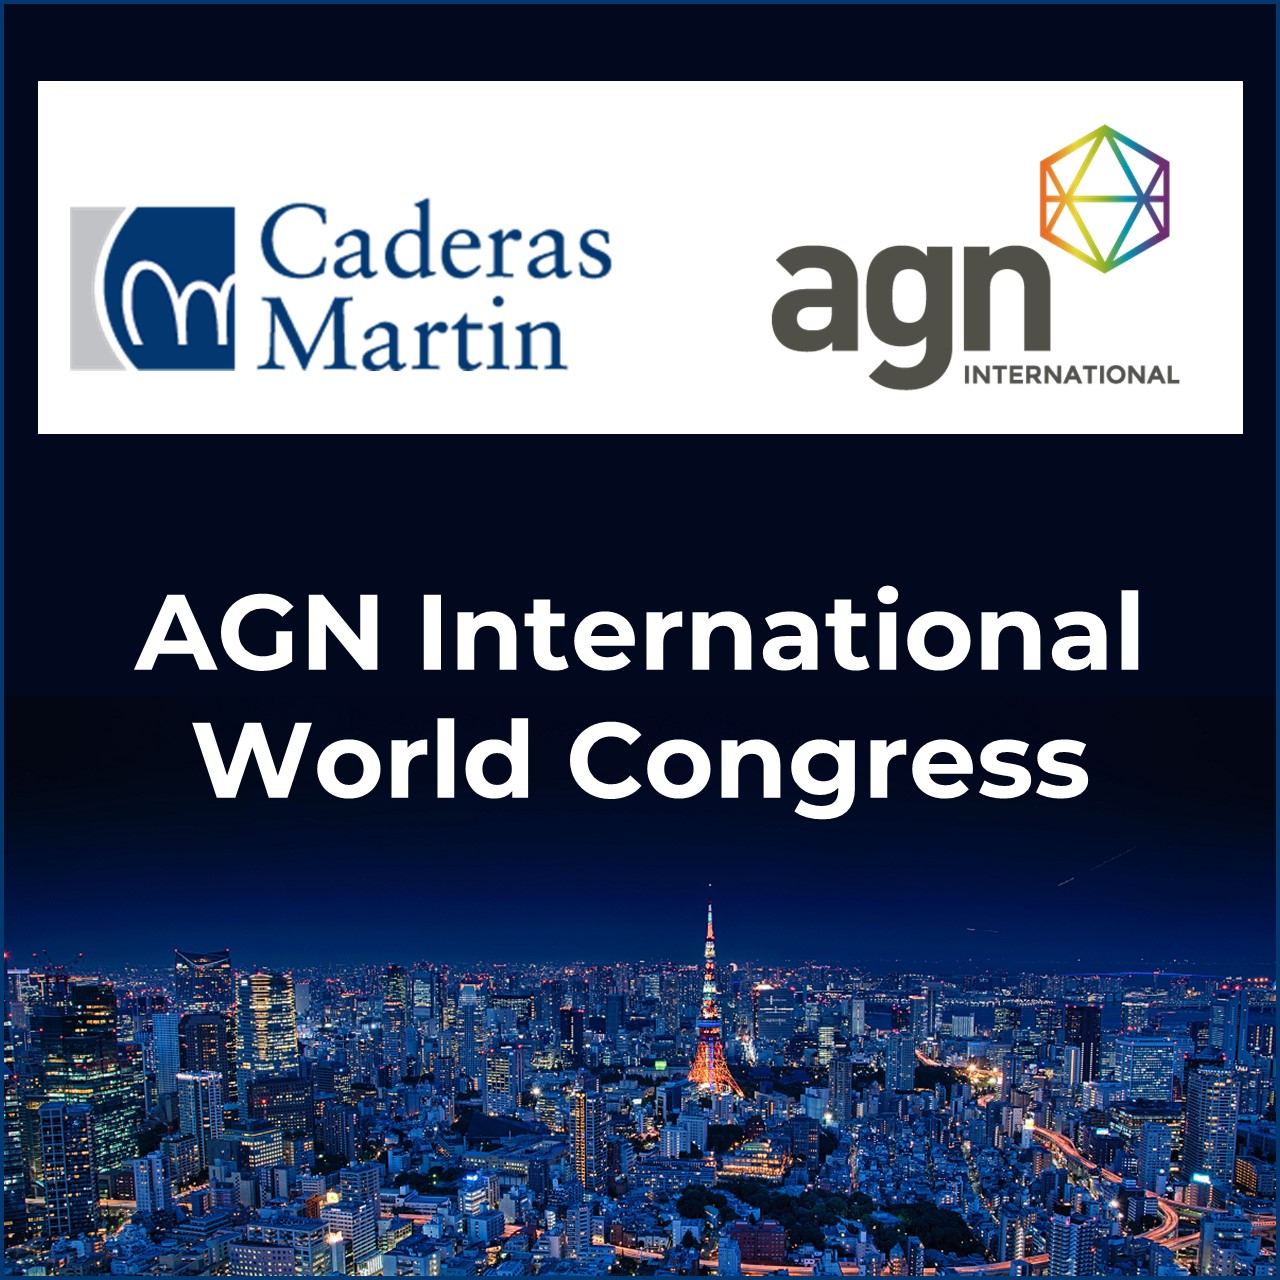 Caderas Martin sera présent au congrès mondial d’AGN International à Tokyo